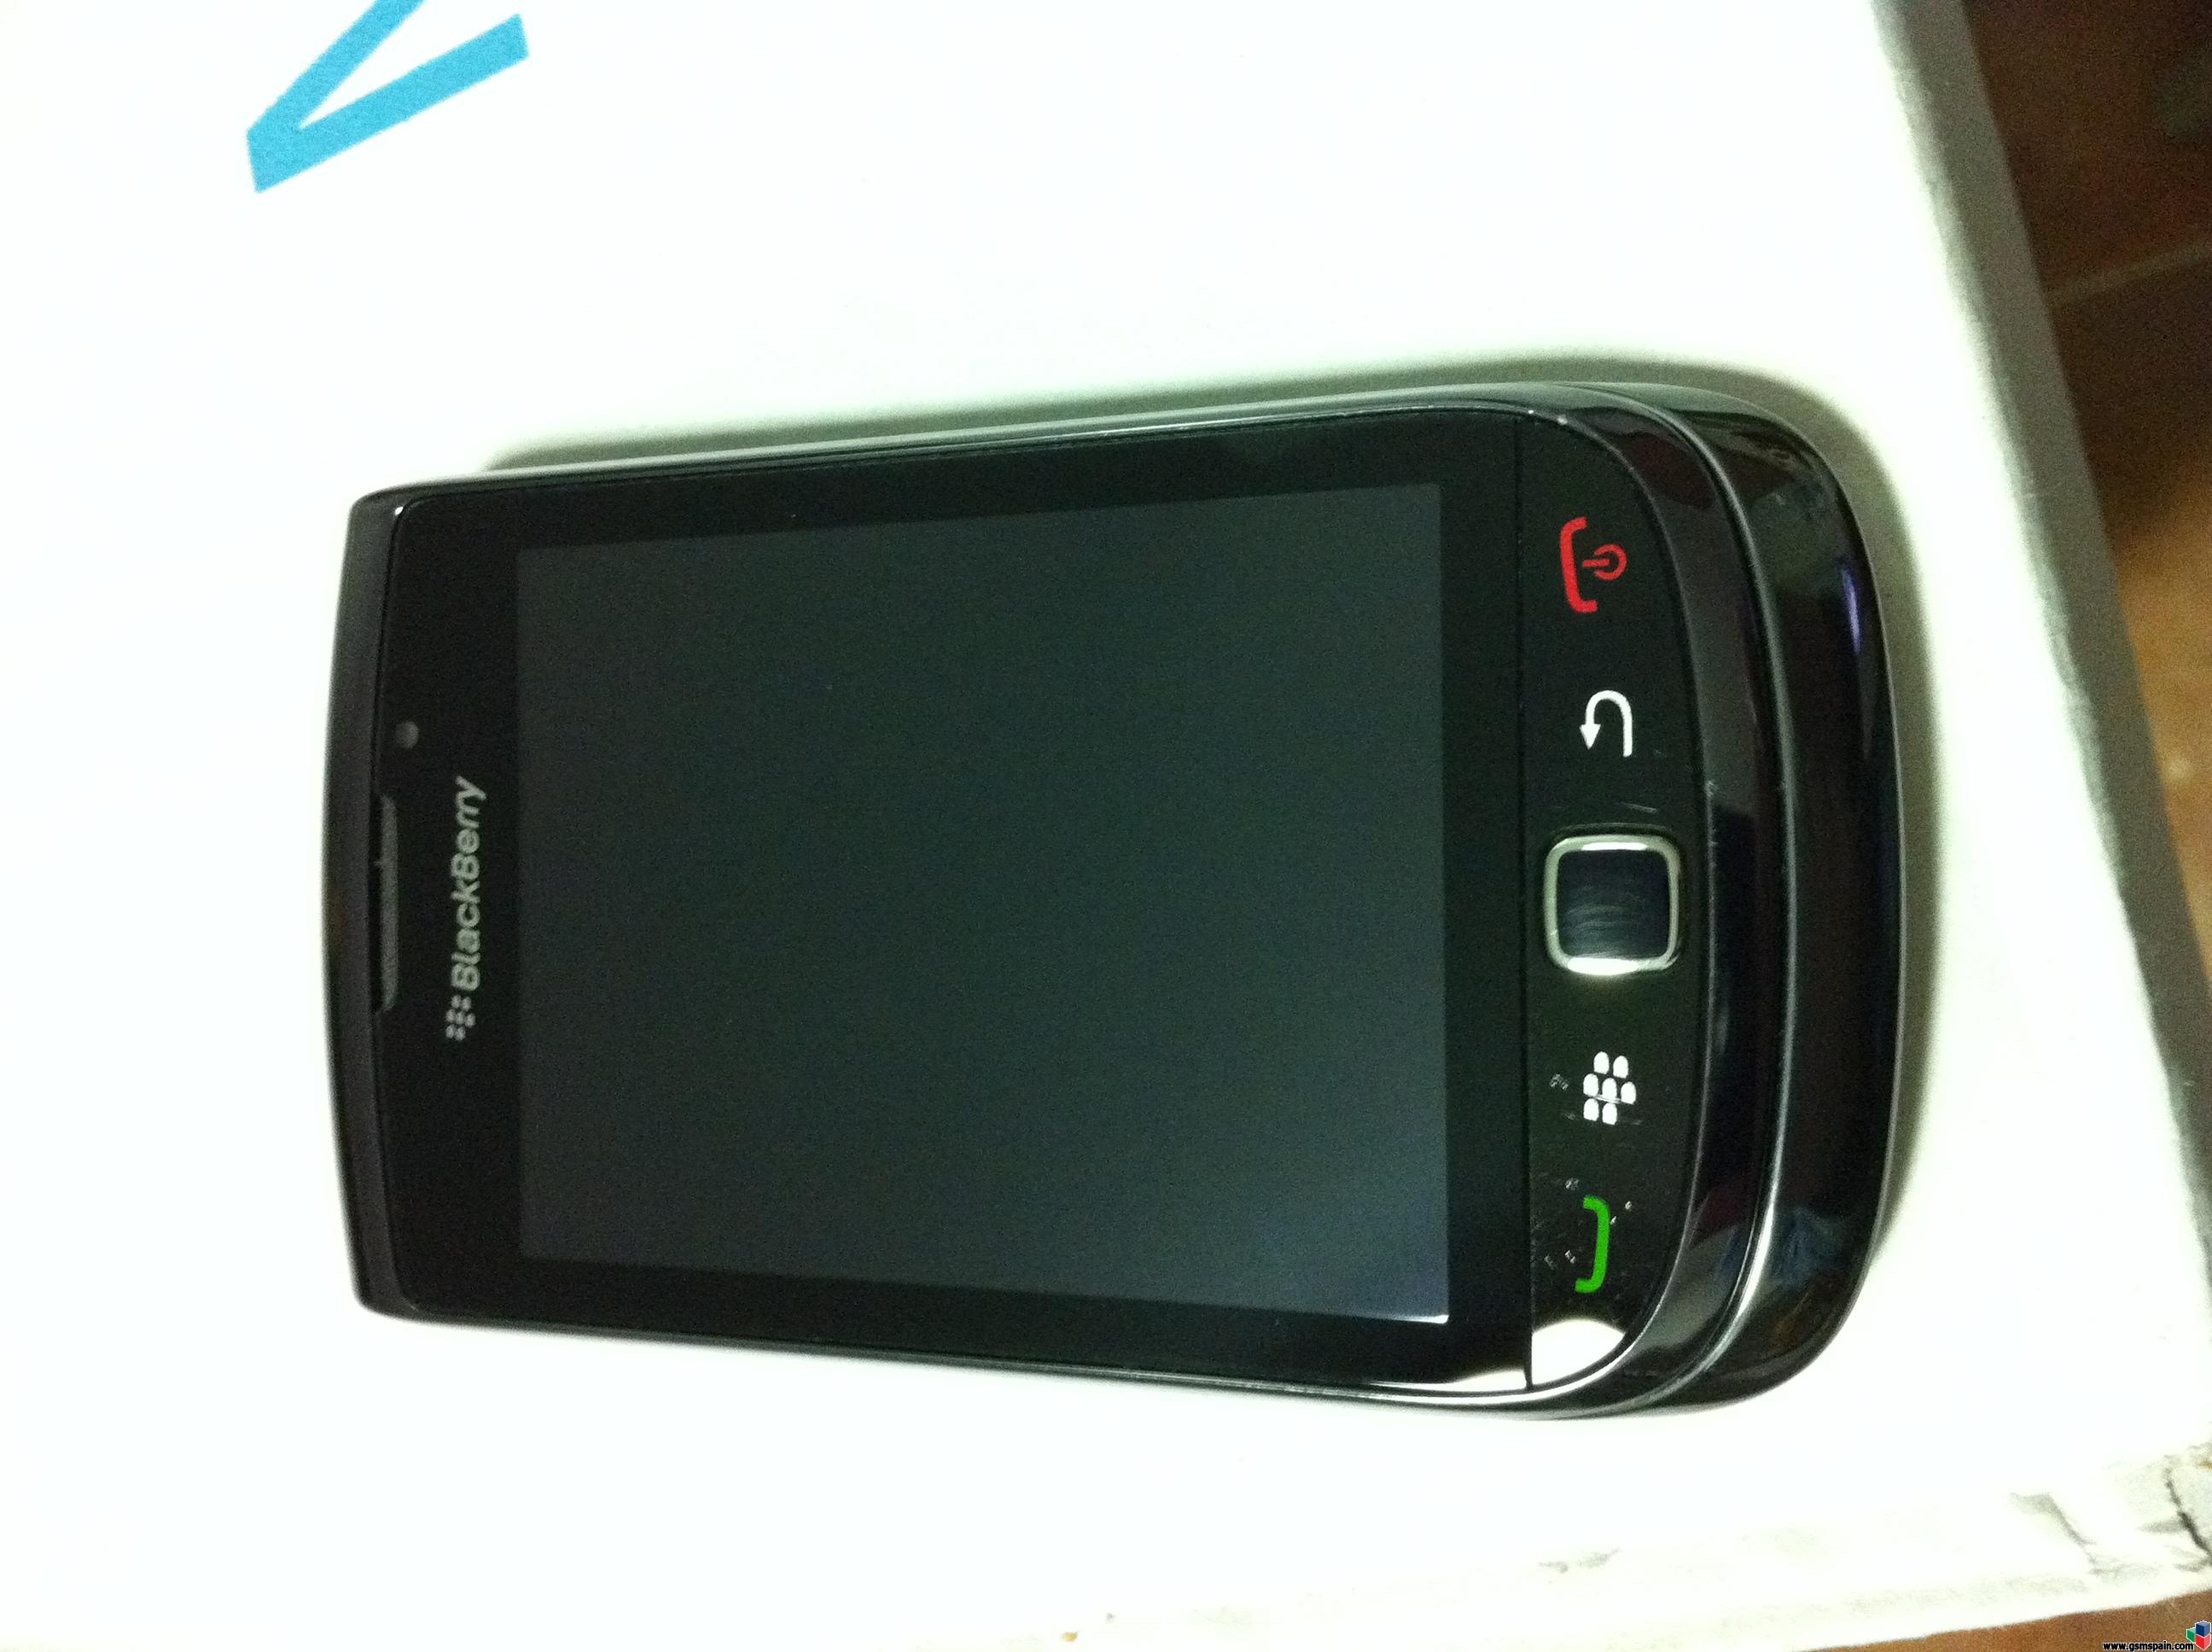 [VENDO] Blackberry 9800 torch 185 envio incluido